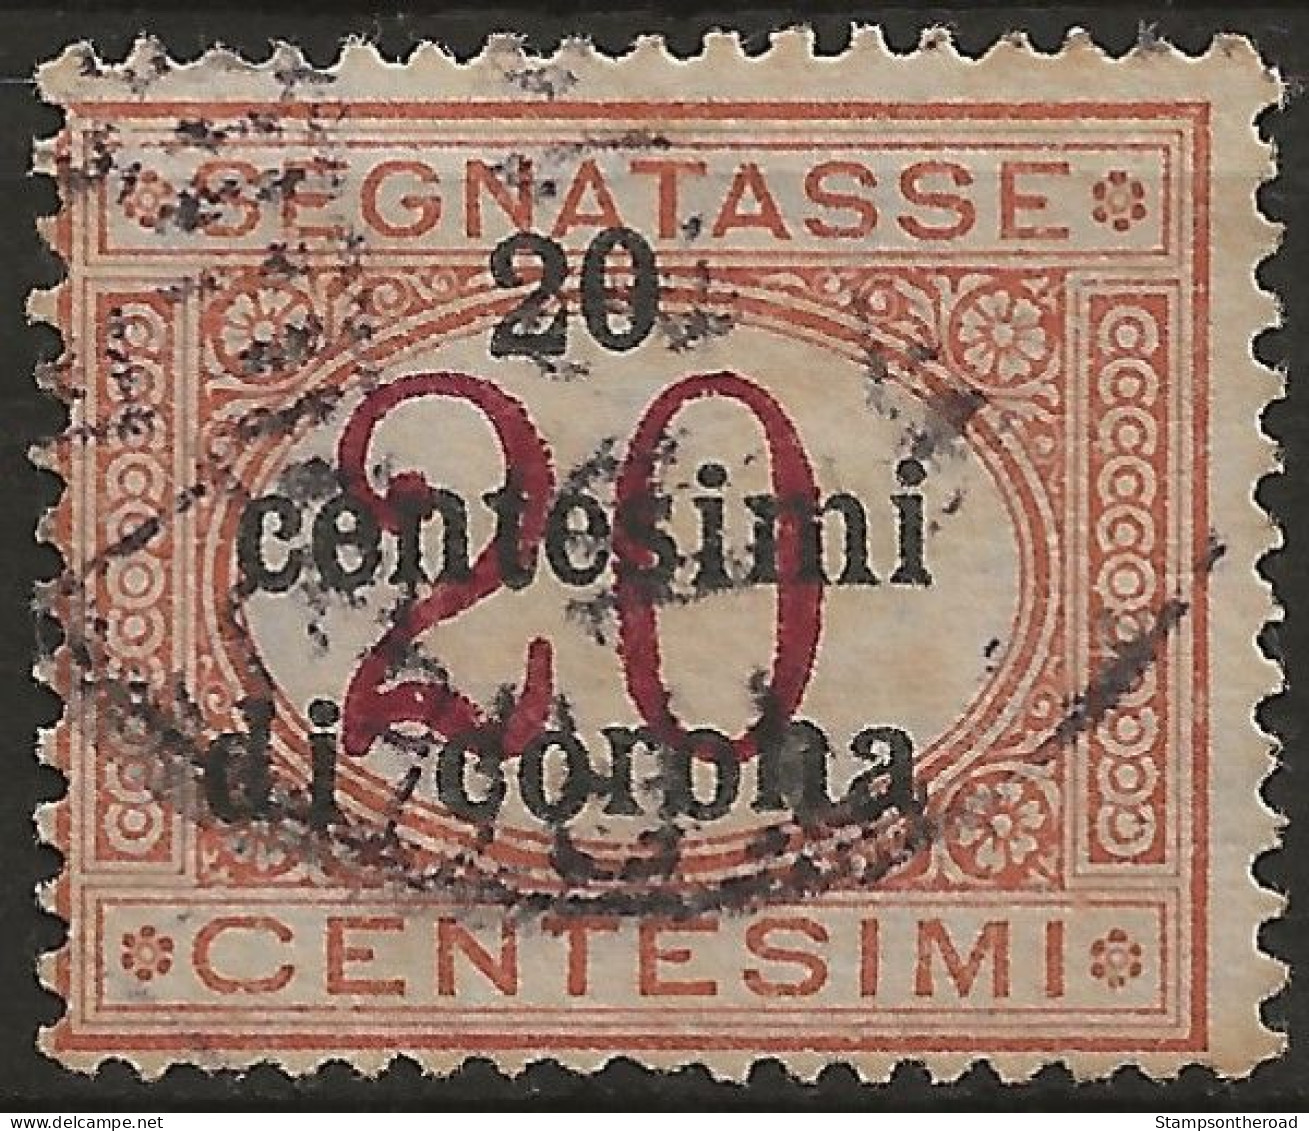 TRTTSx3U6,1919 Terre Redente - Trento E Trieste, Sassone Nr. 3, Segnatasse Usato Per Posta °/ - Trente & Trieste